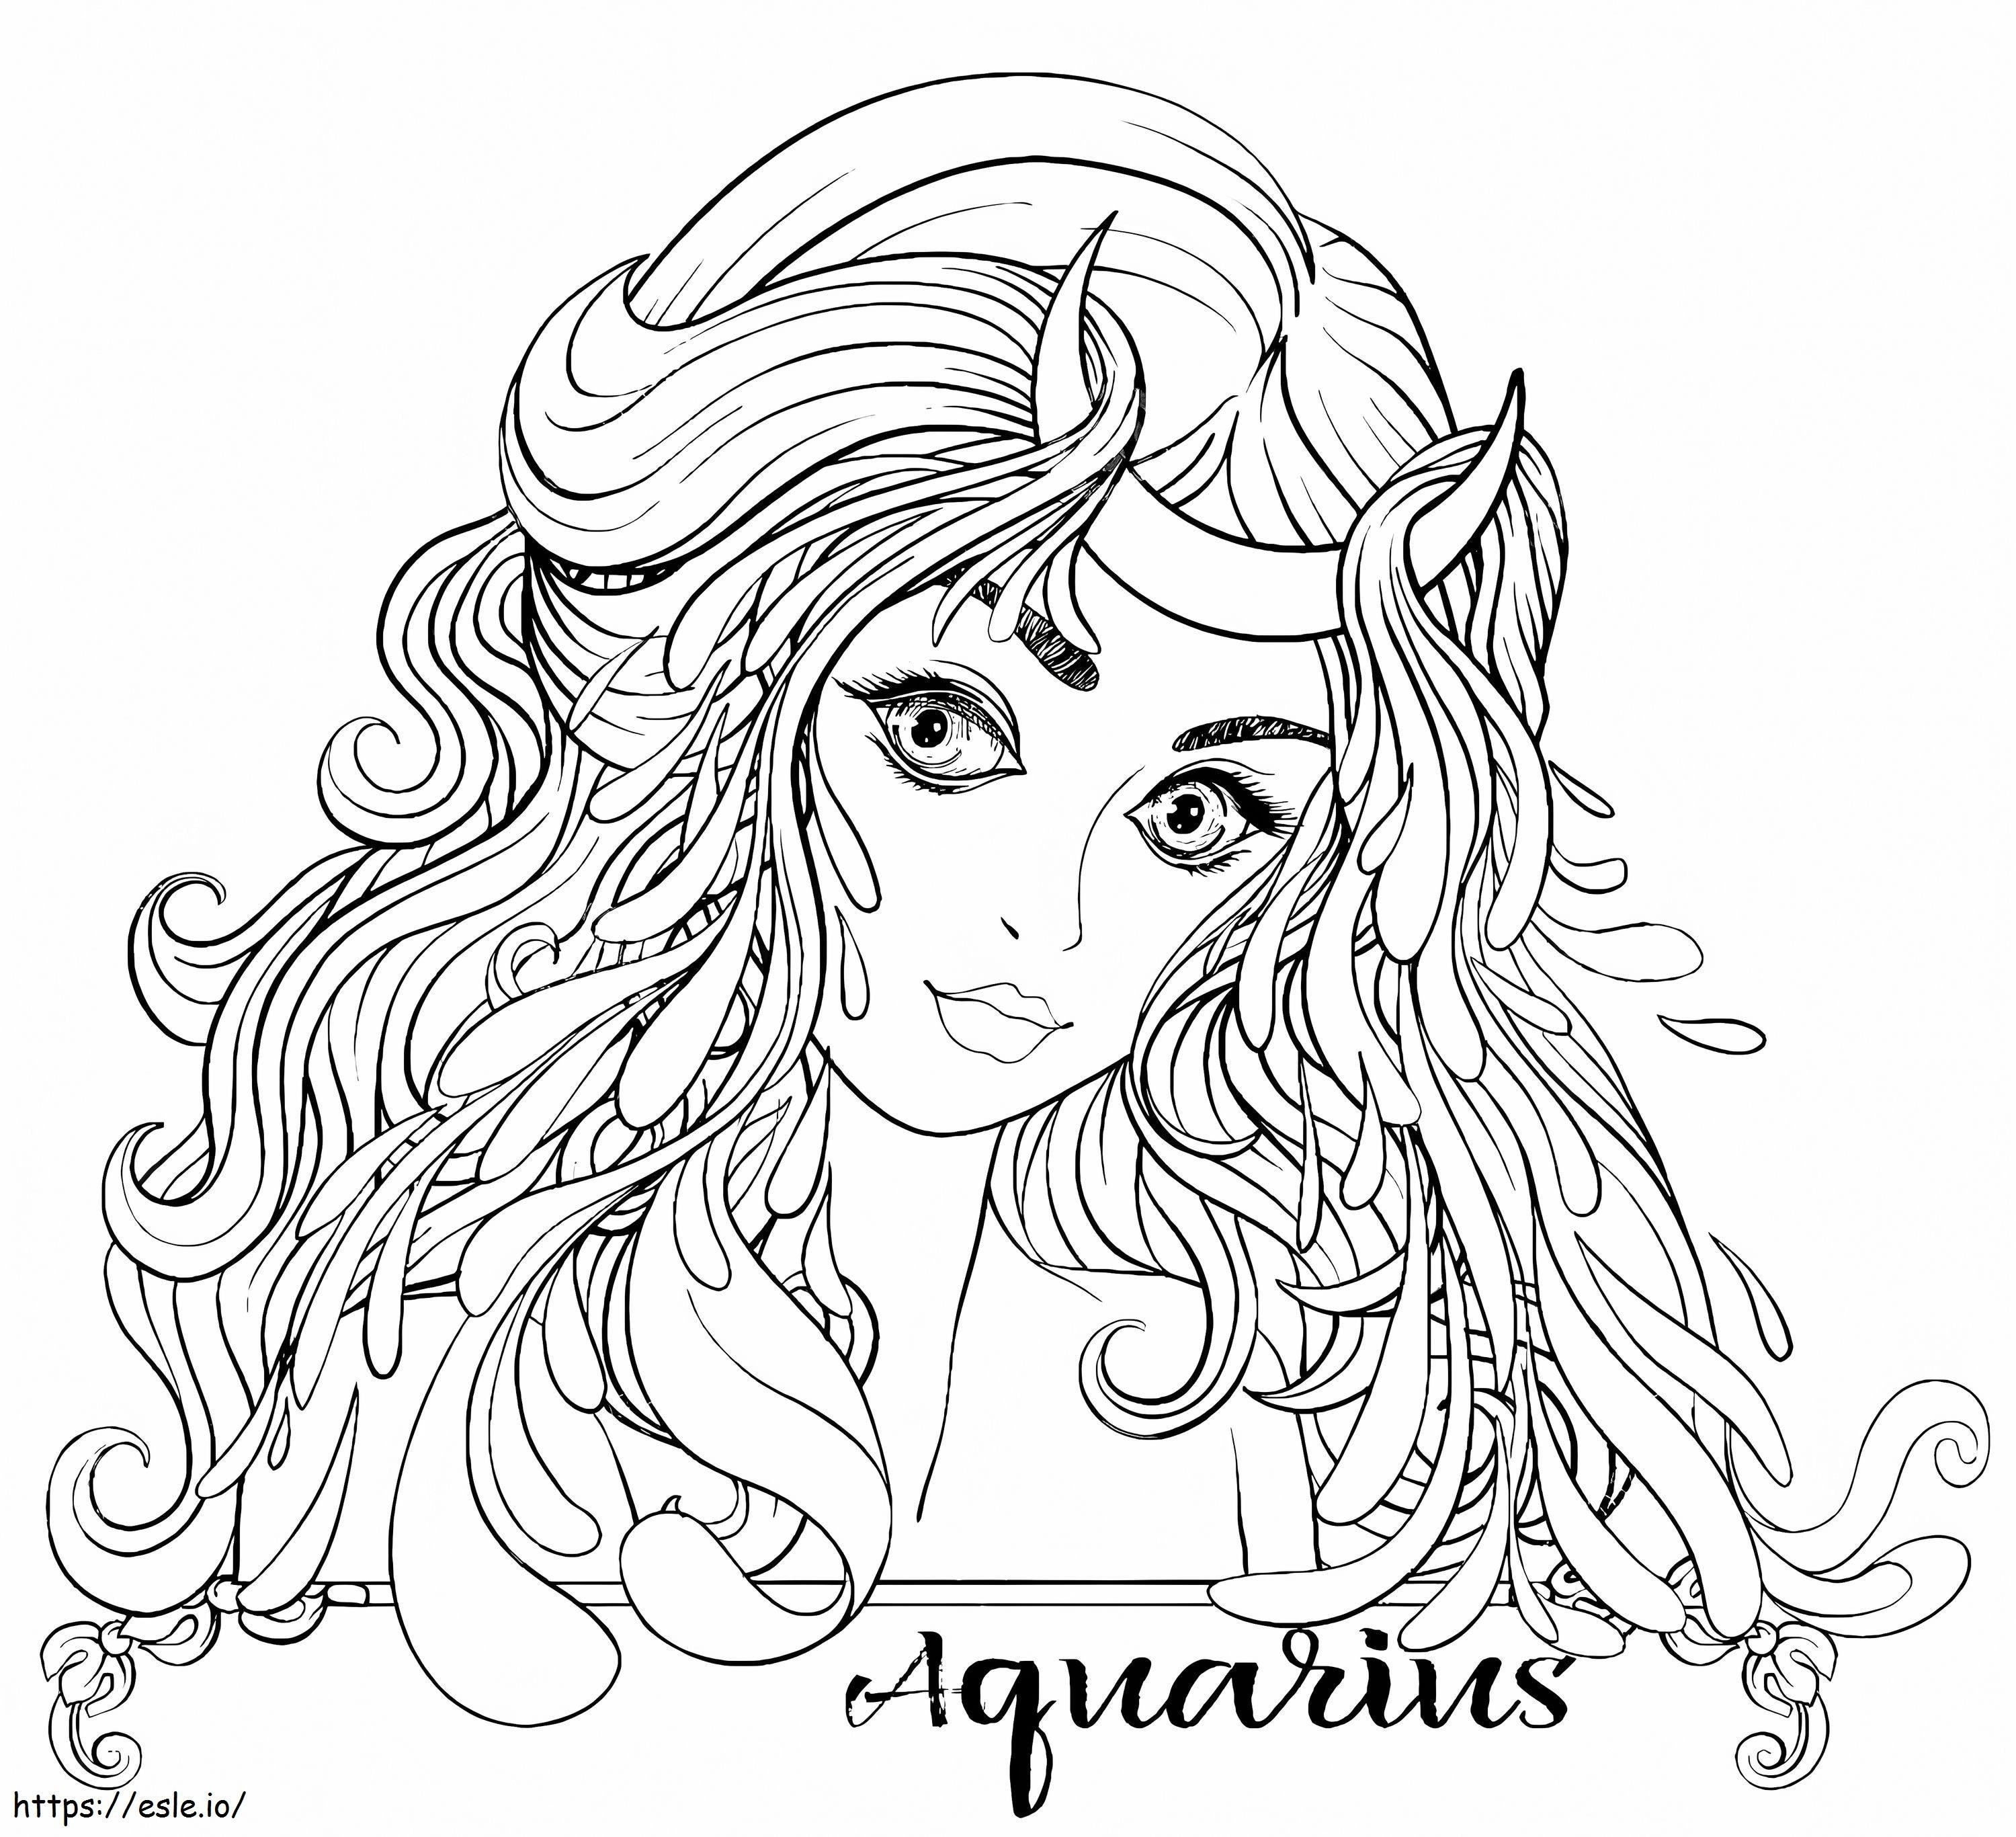 Aquarius 23 coloring page